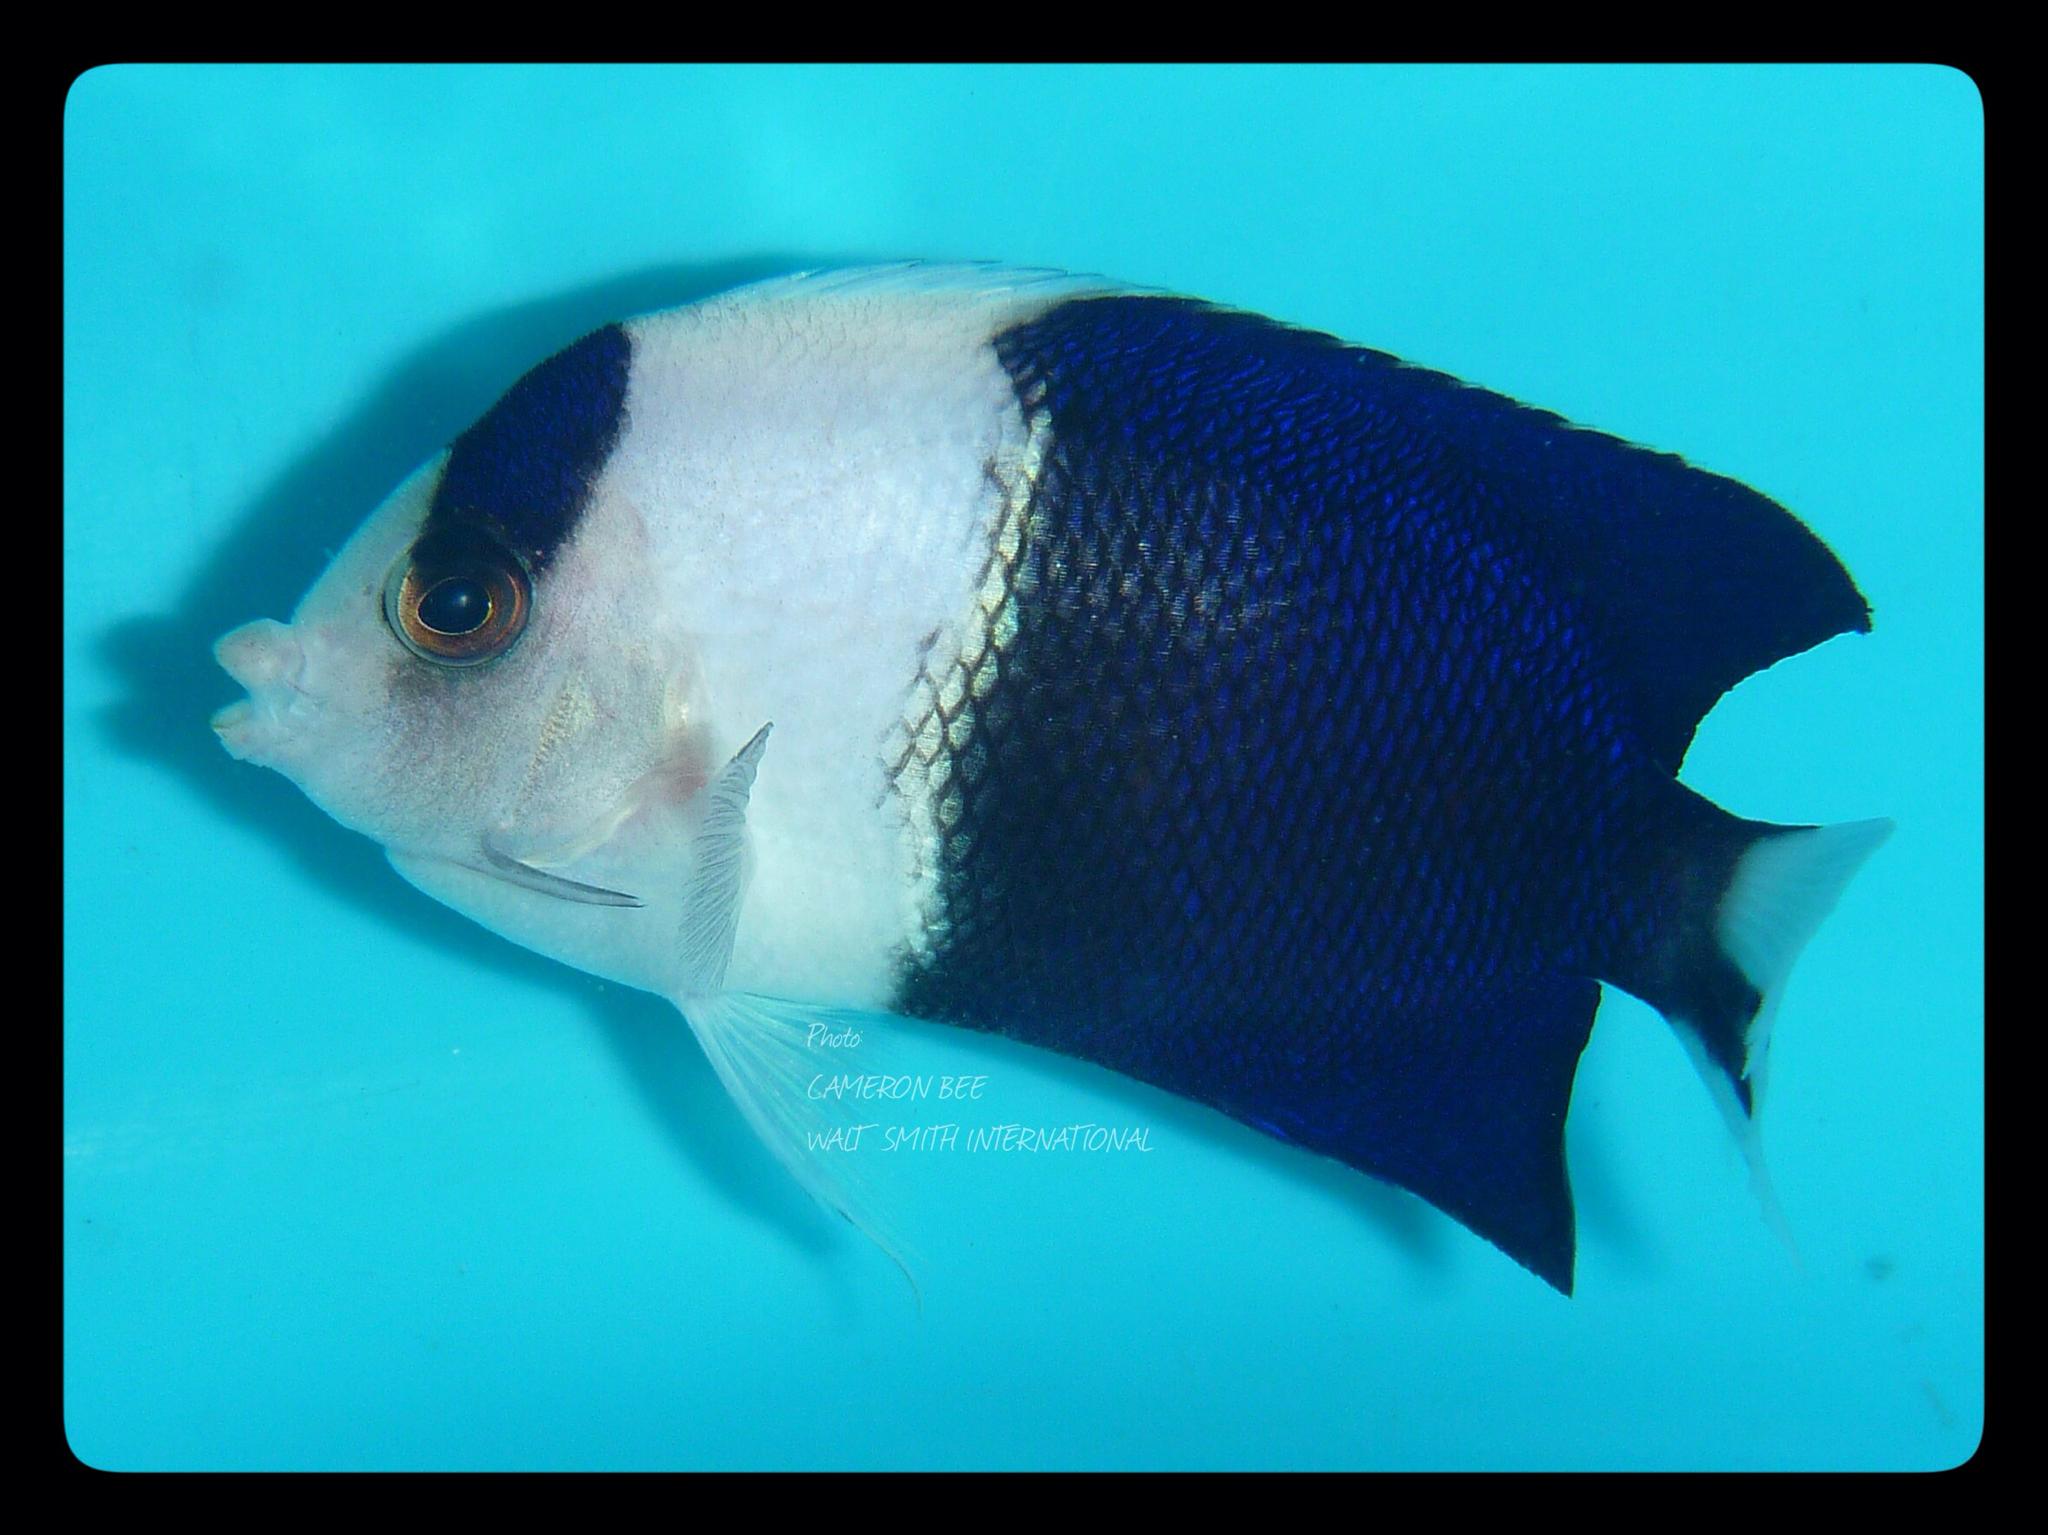 Half white 'Panda' bicolor angelfish collected by Walt Smith Fiji ...